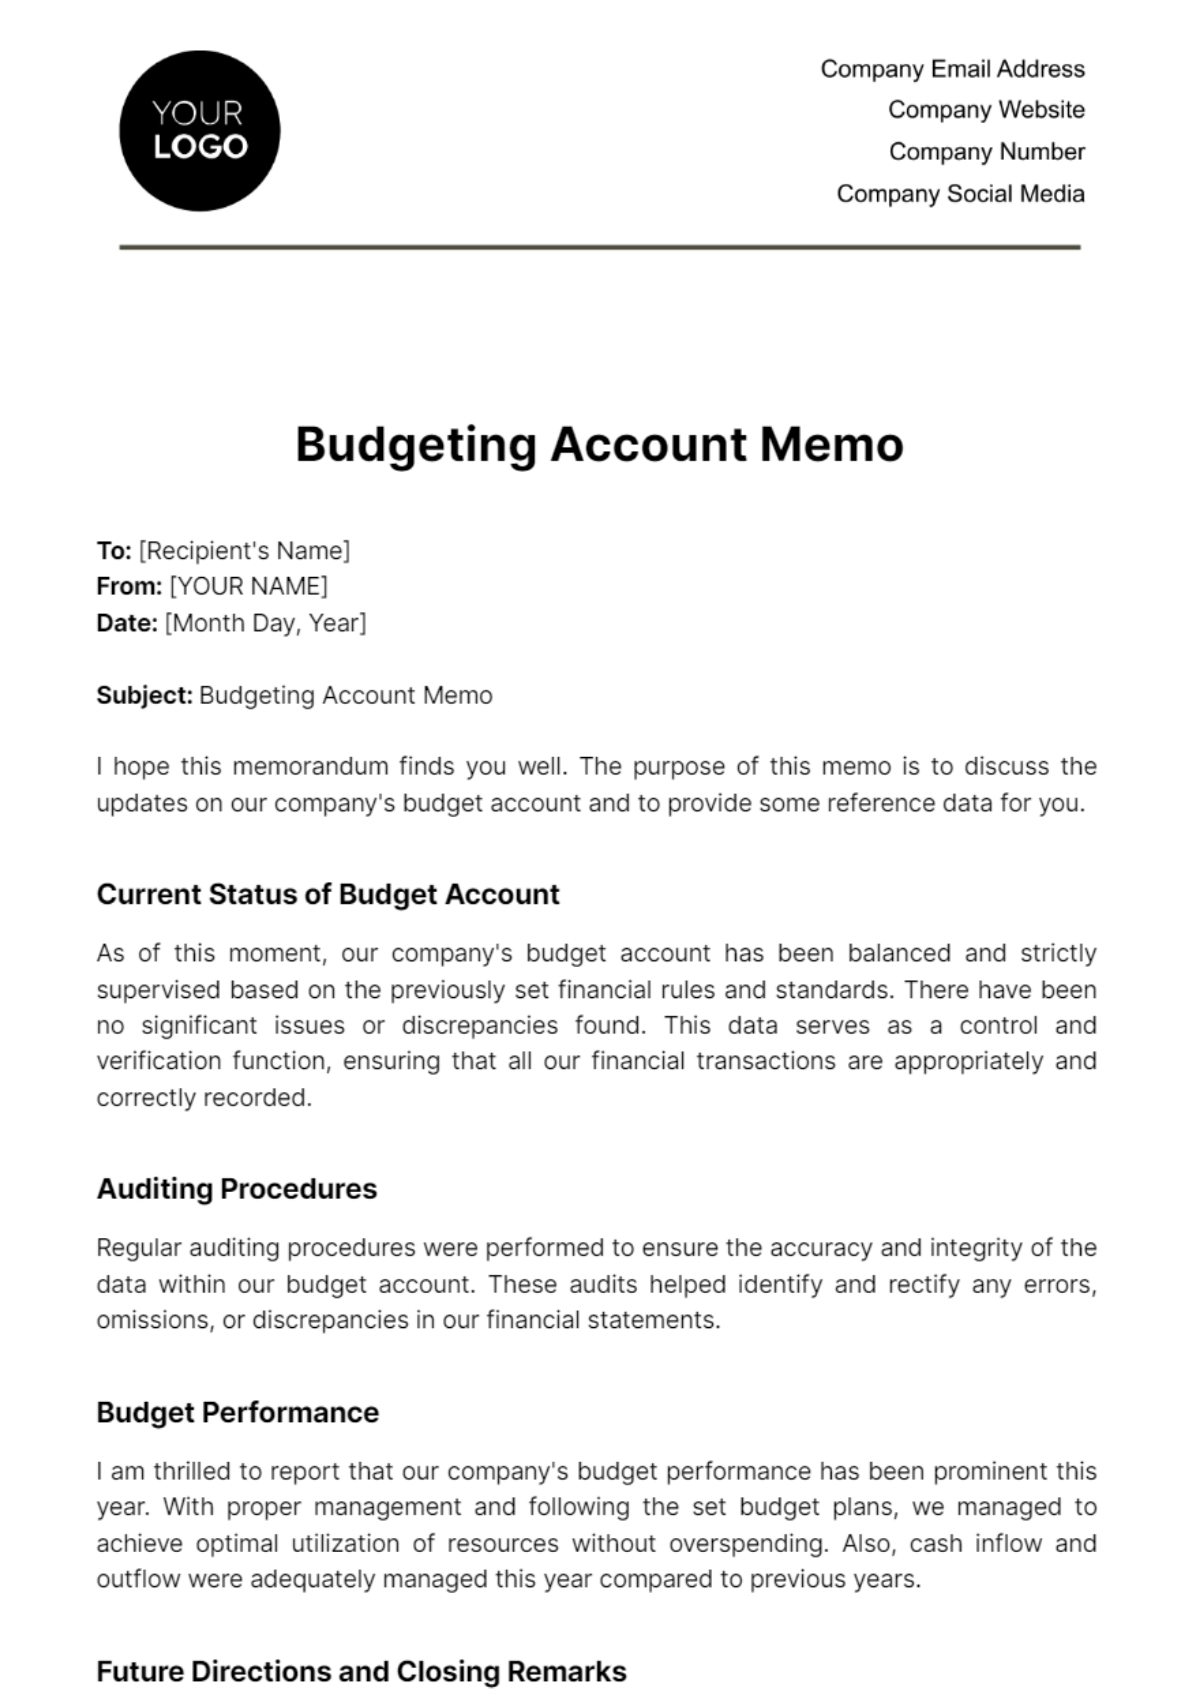 Free Budgeting Account Memo Template